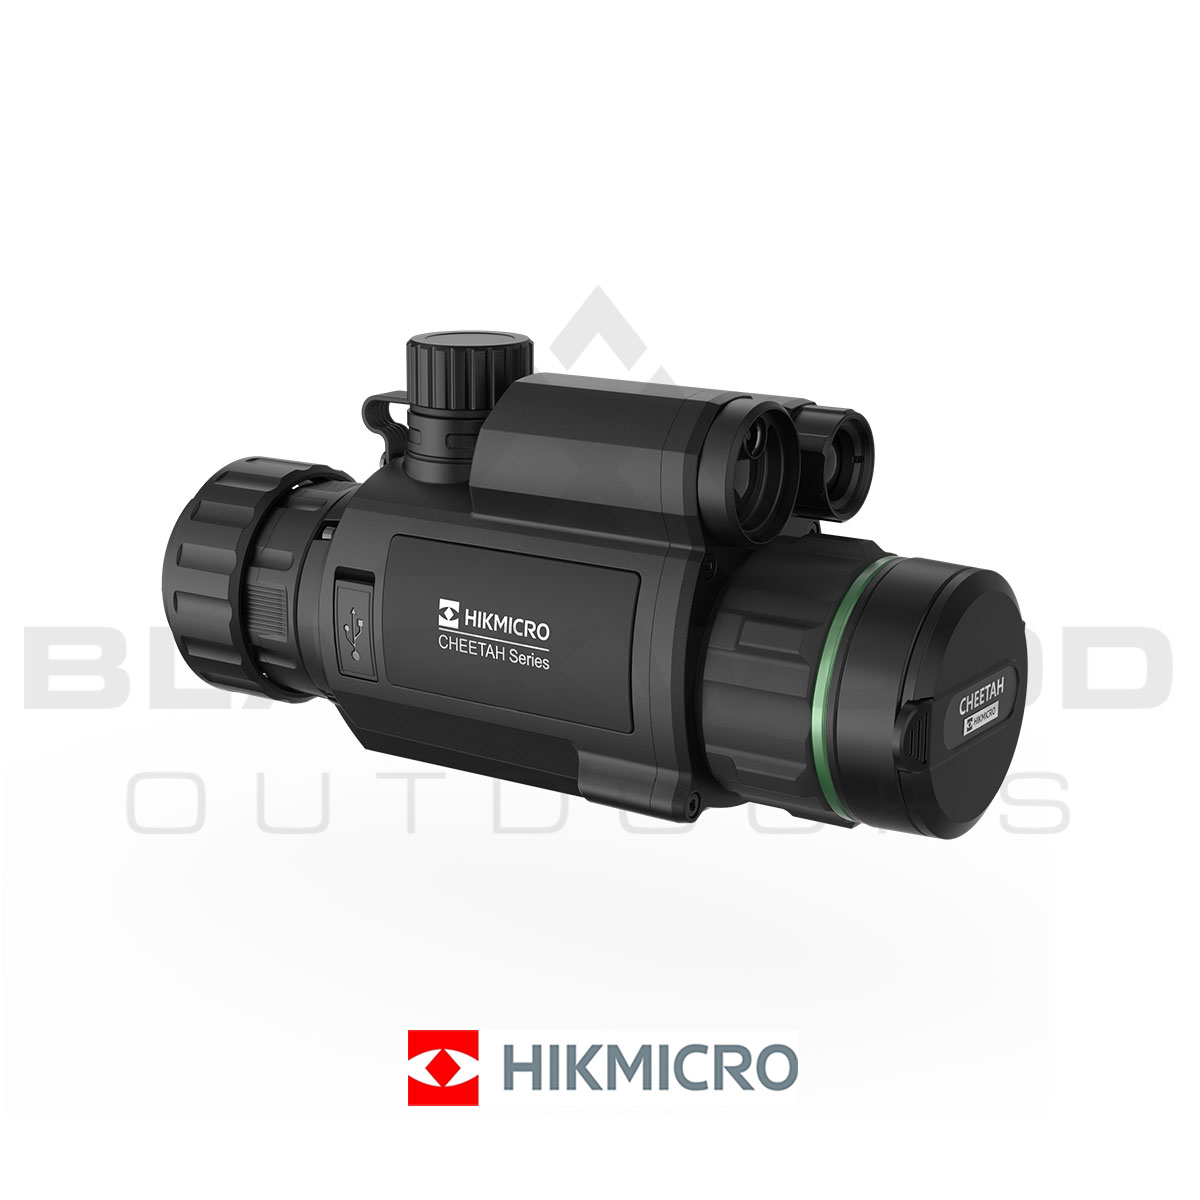 Hik Micro Cheetah front mounted night vision with LRF C32F-RL unit.